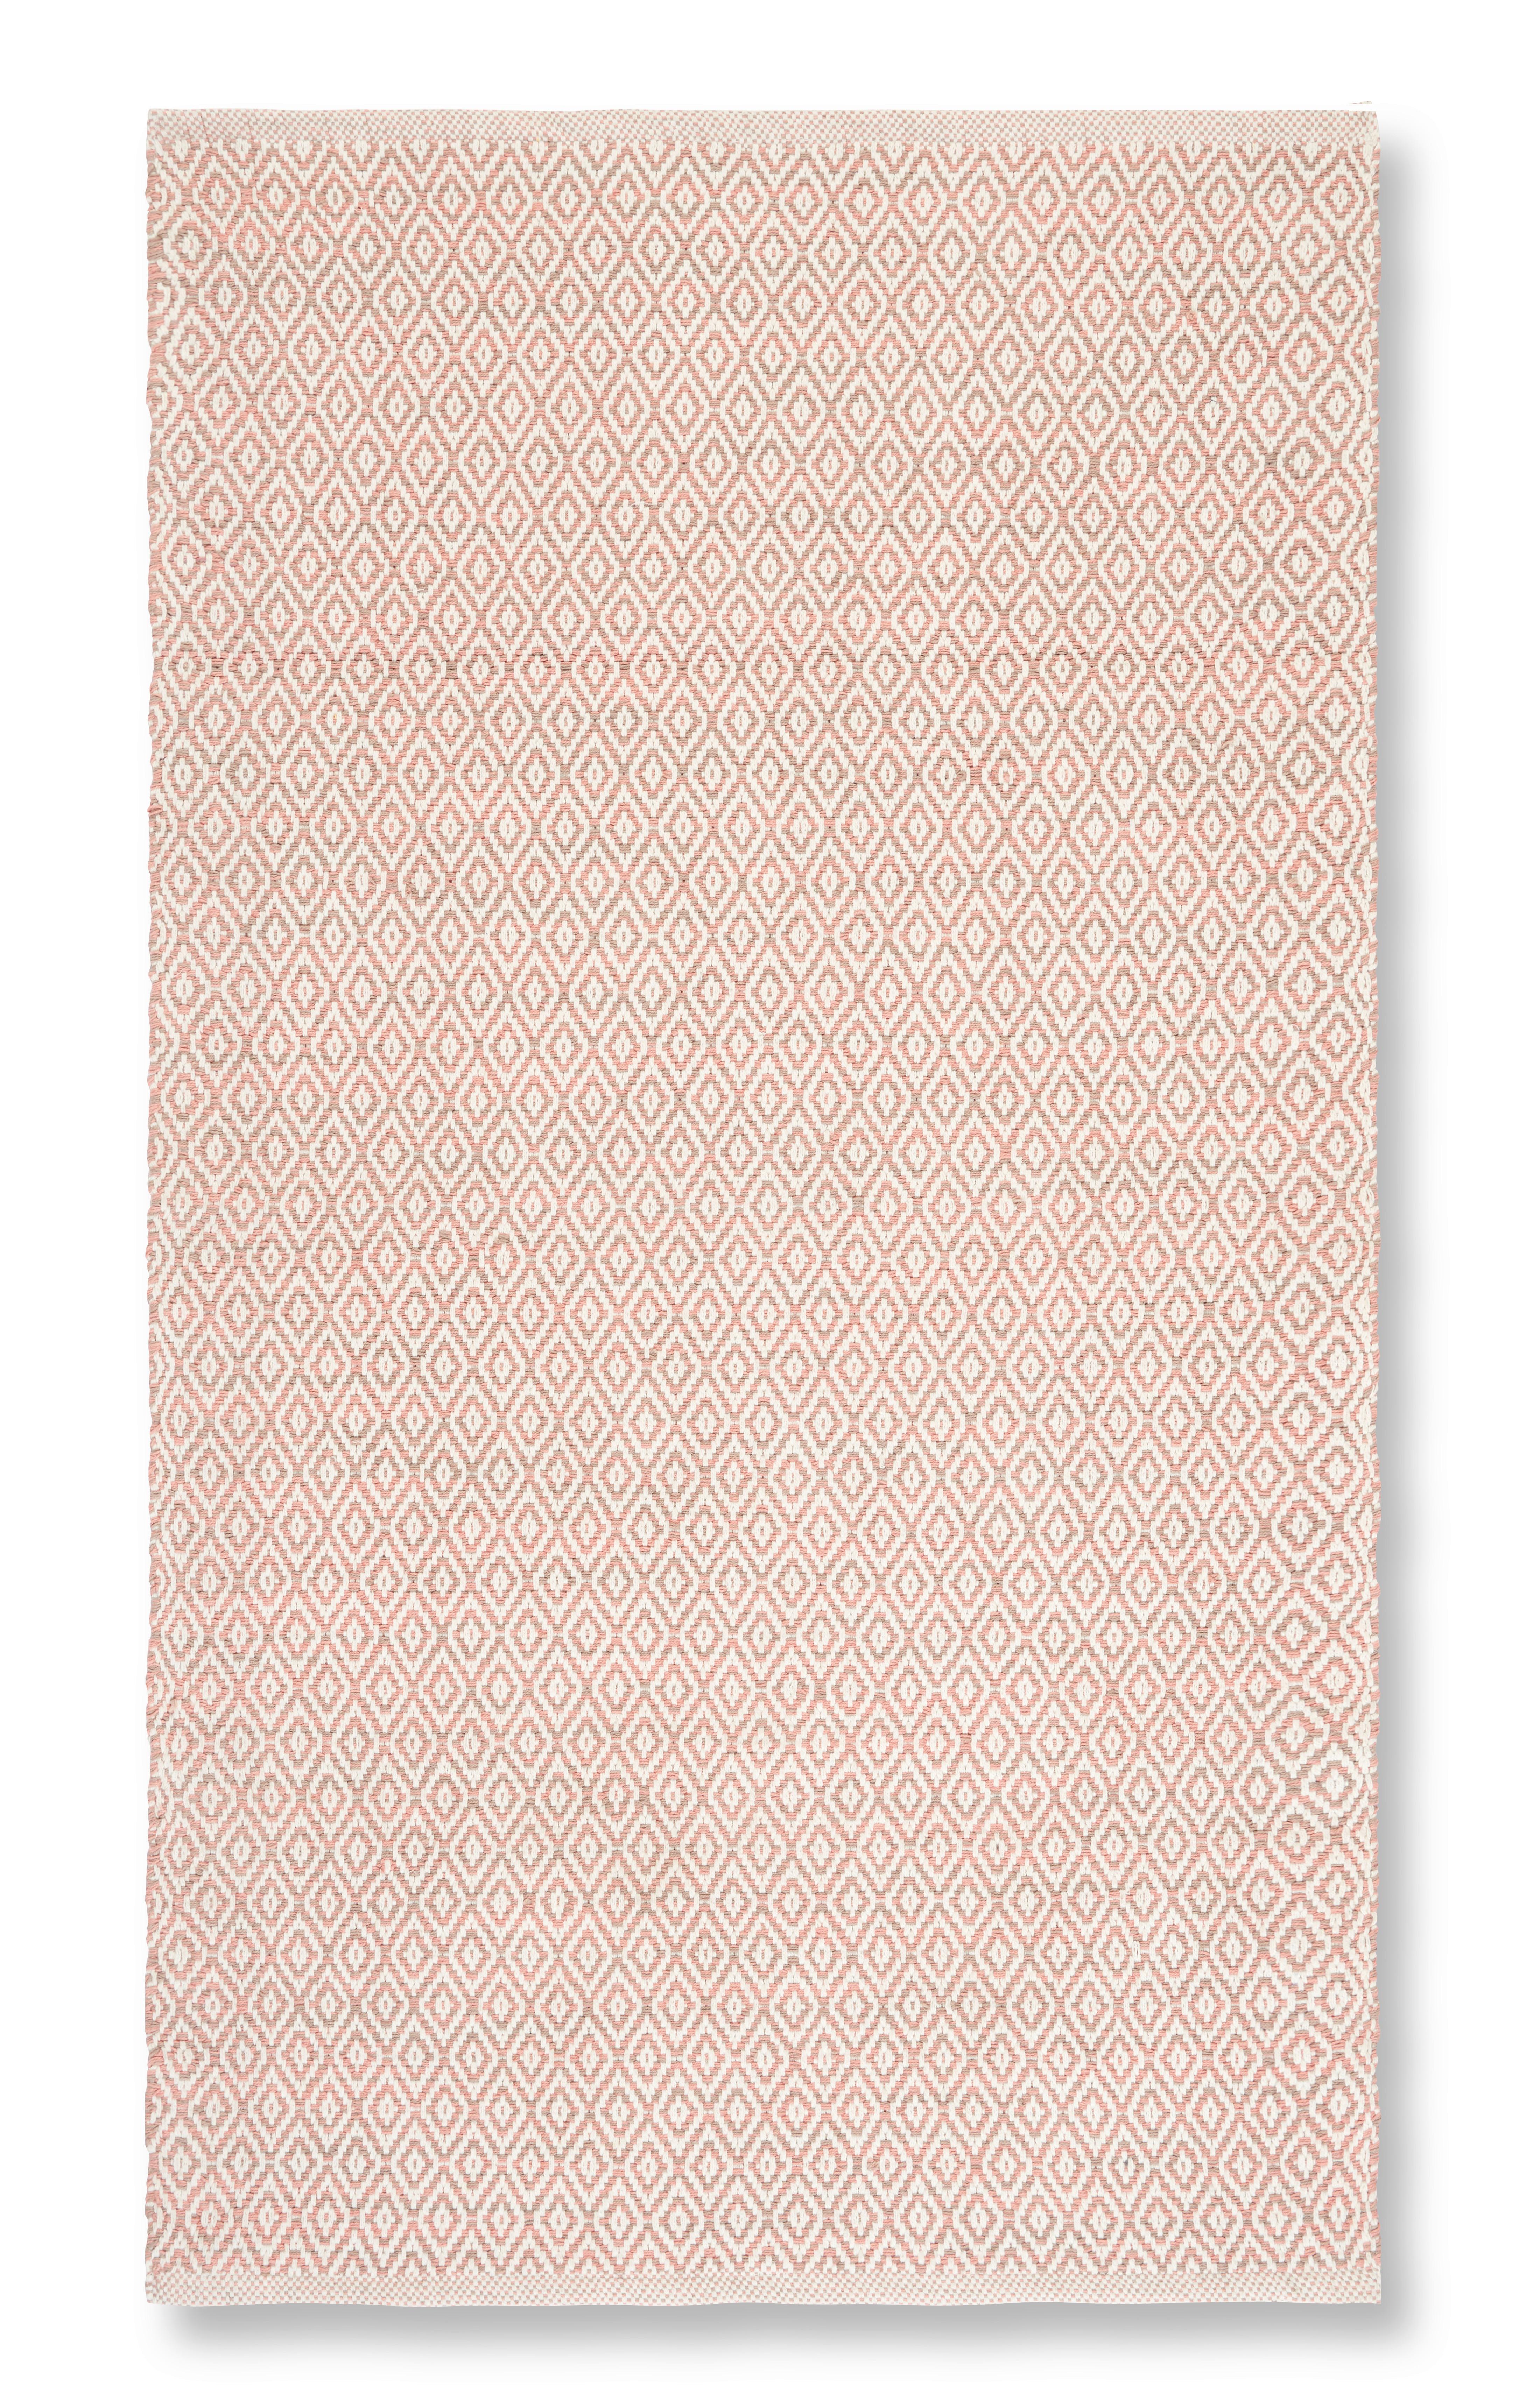 Covor țesut de mână CAROLA 1 - roz, Basics, textil (60/120cm) - Modern Living